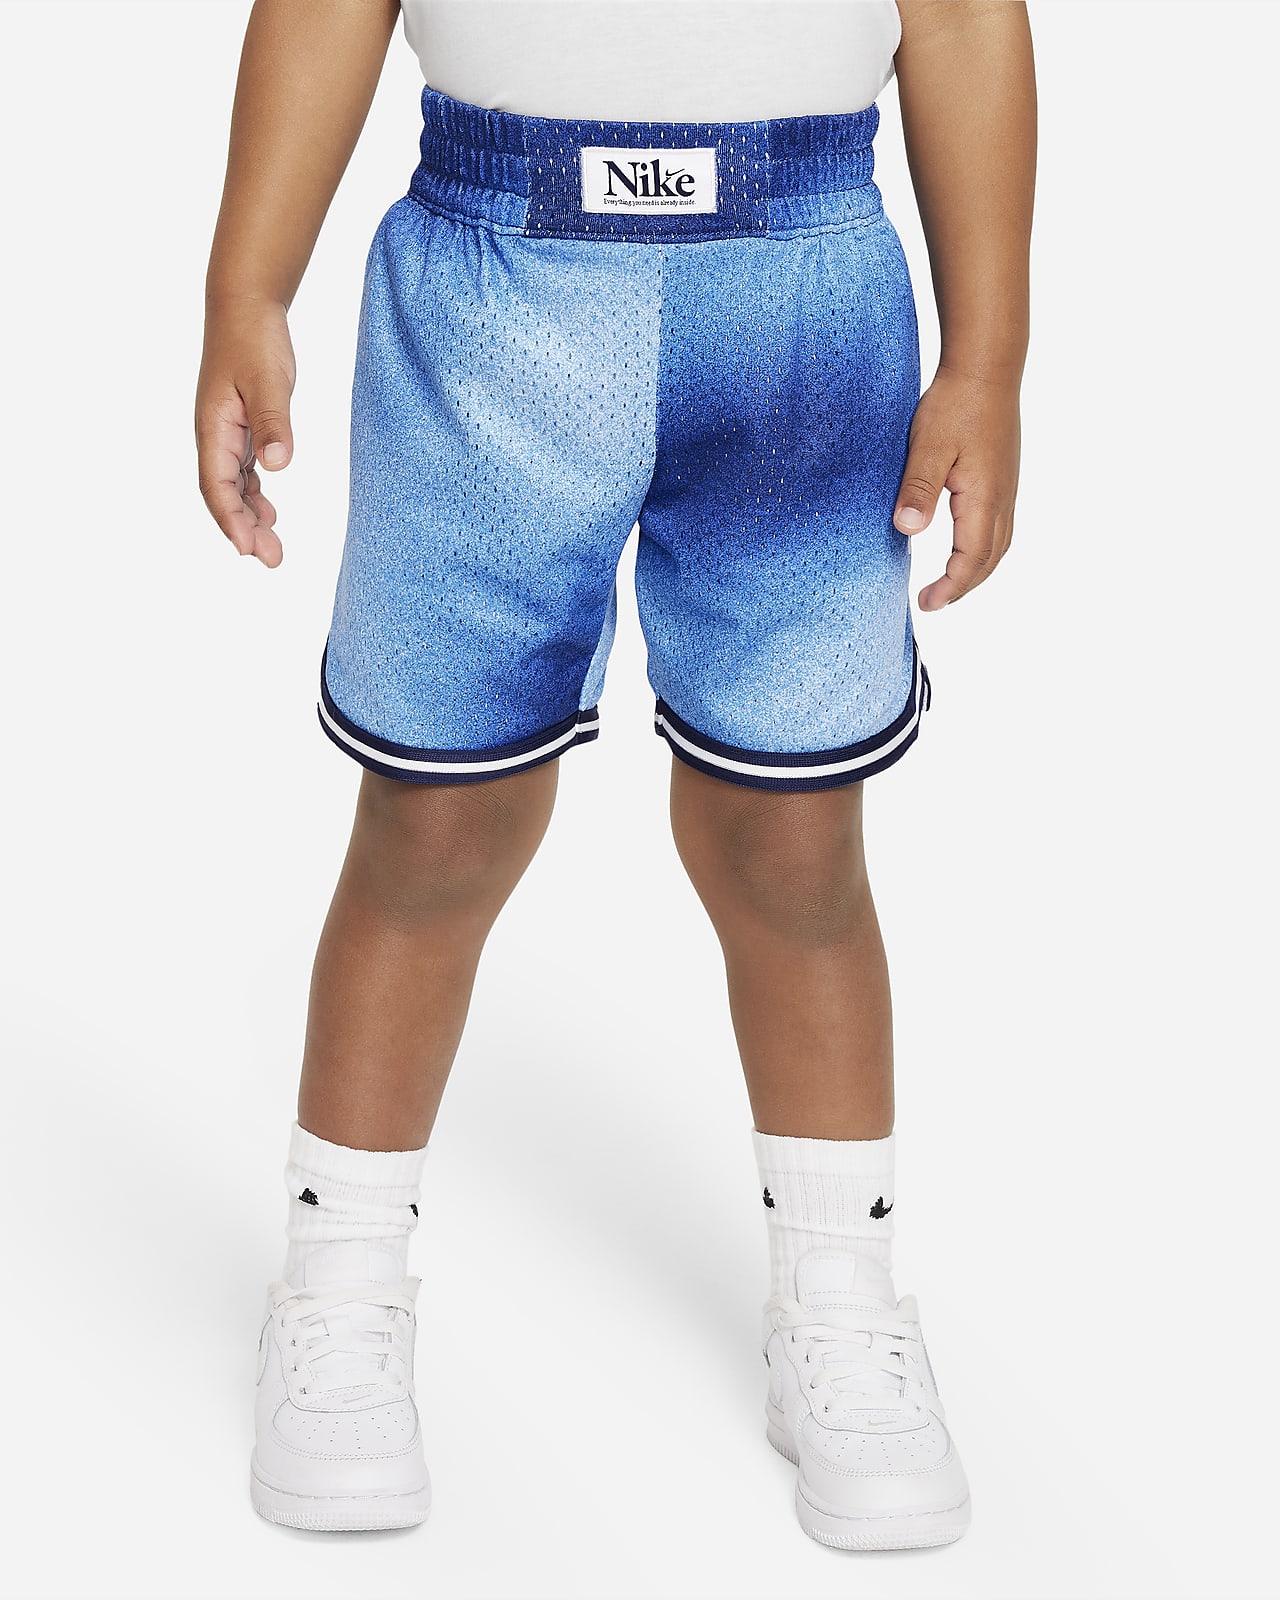 Nike Culture of Basketball Printed Shorts Toddler Shorts